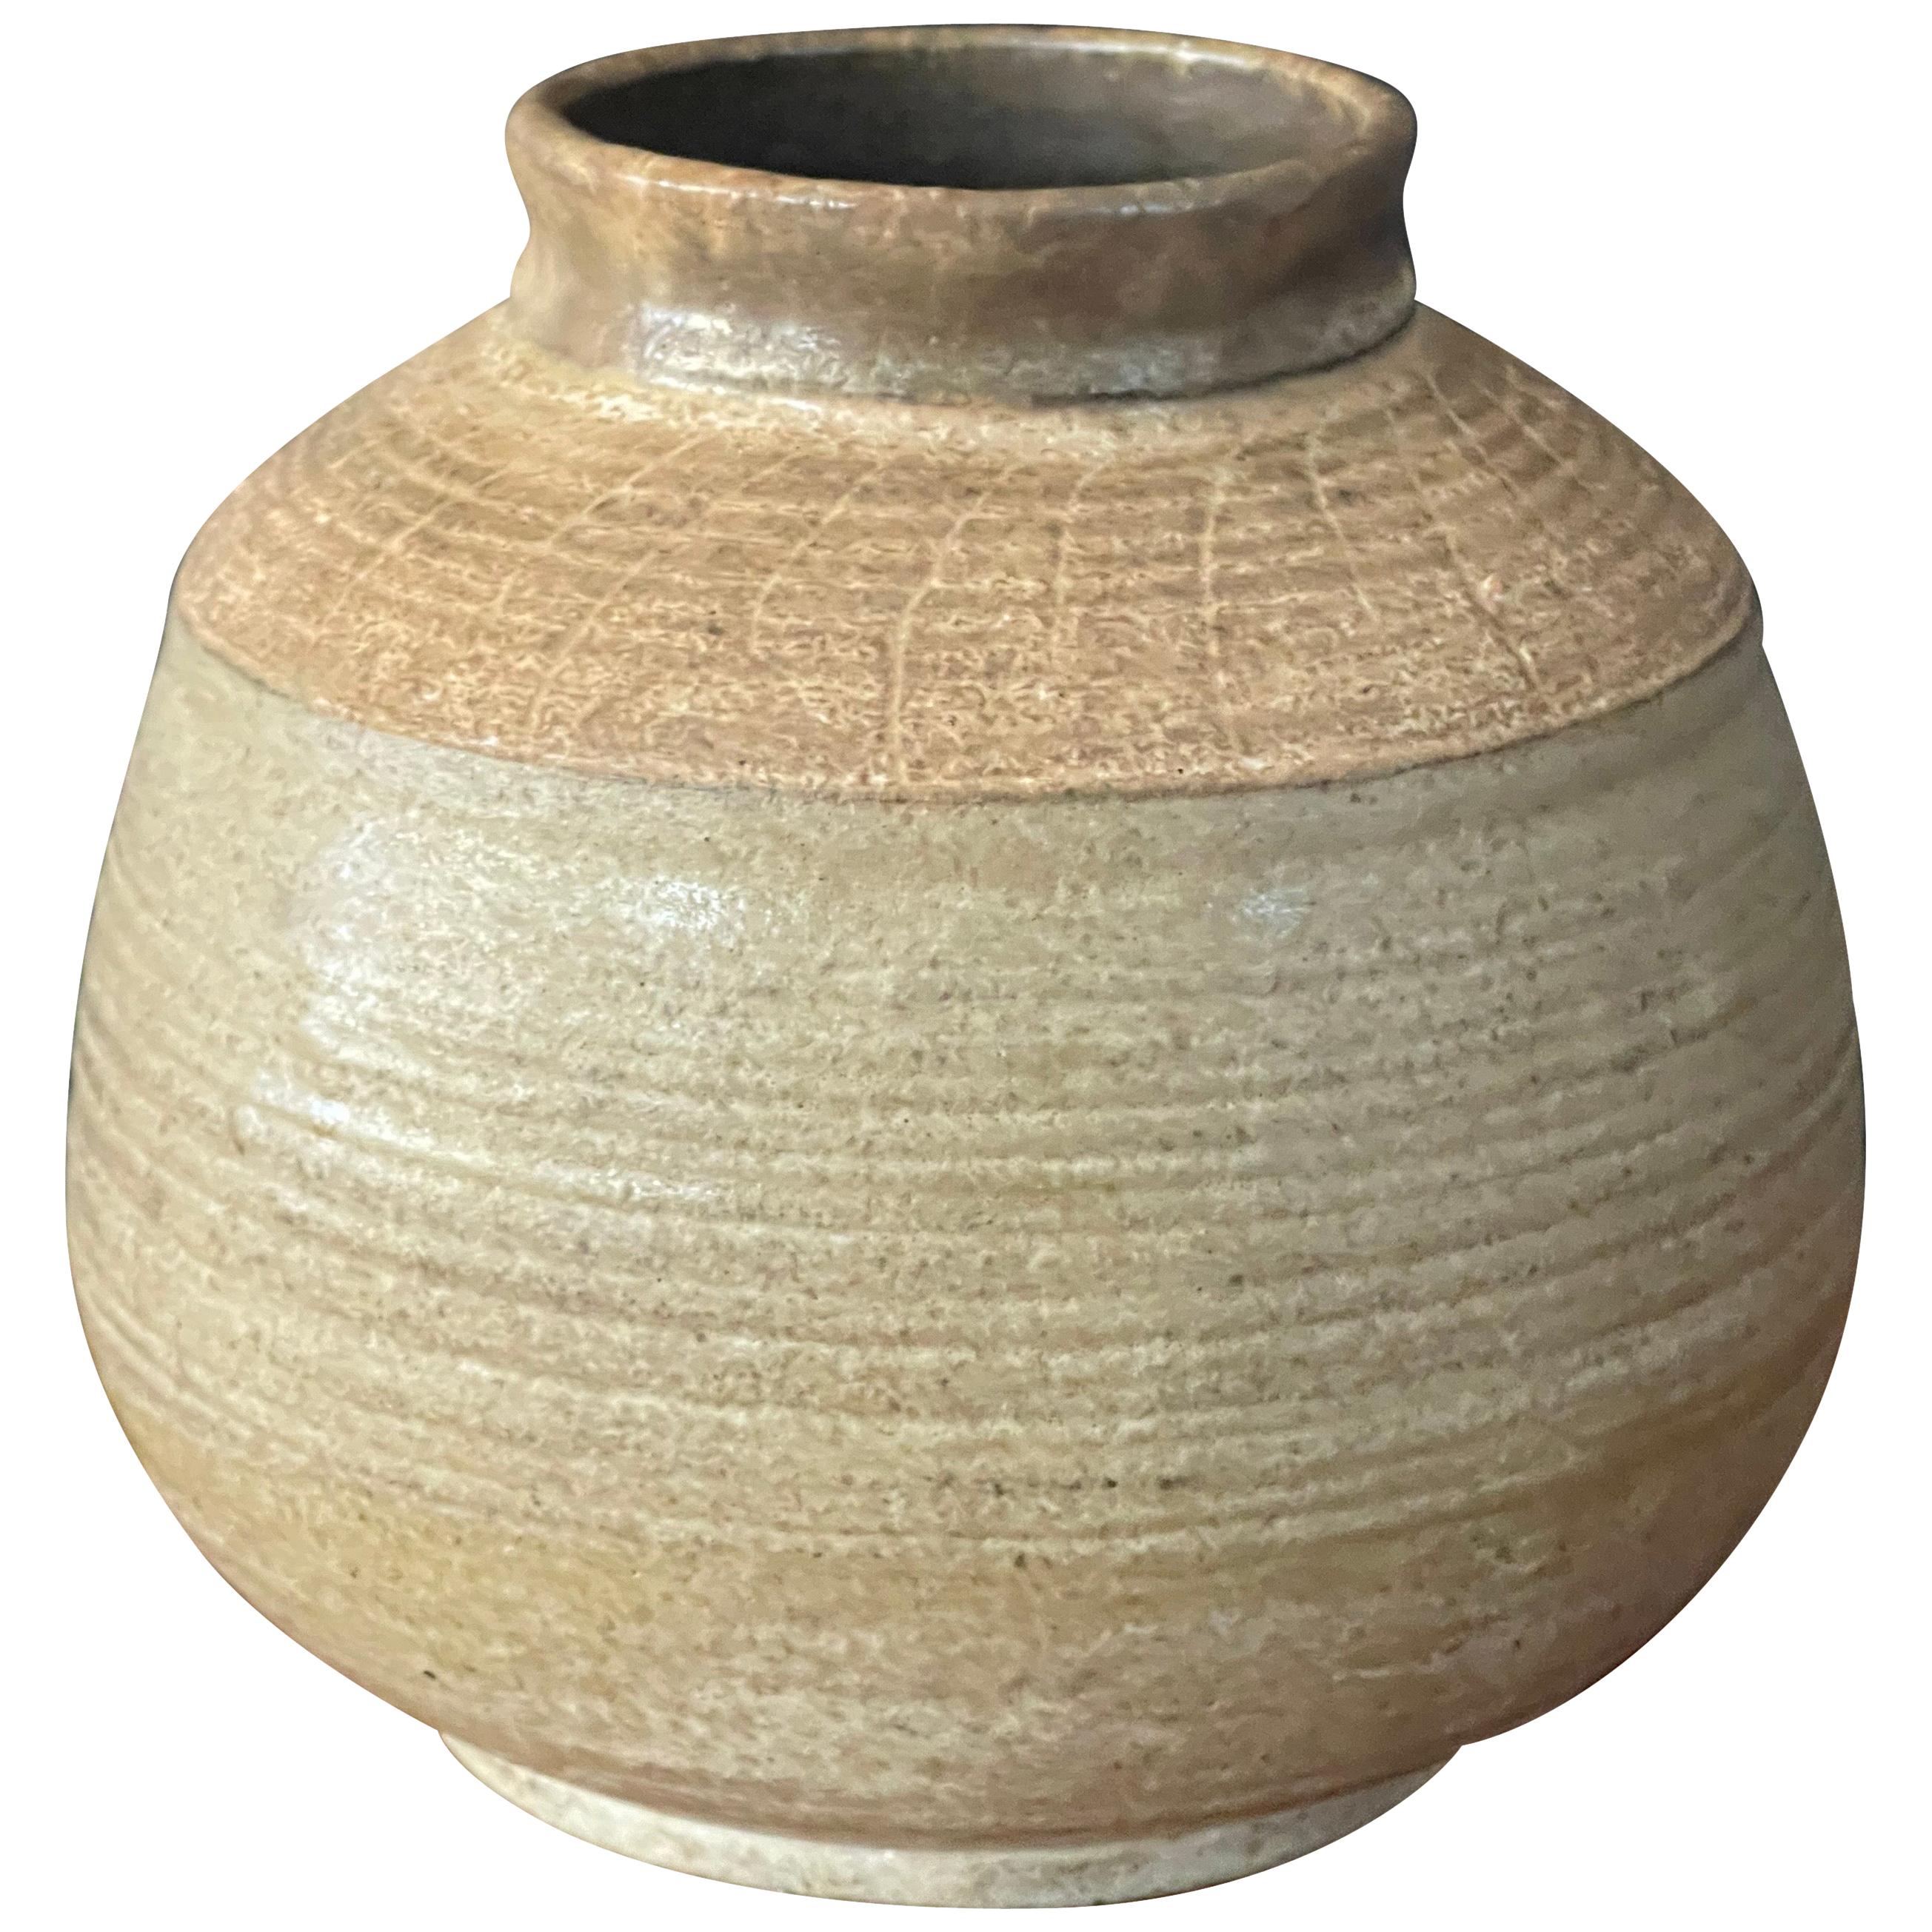 California Studio Pottery Ceramic Vase by Helen Noel Shagam